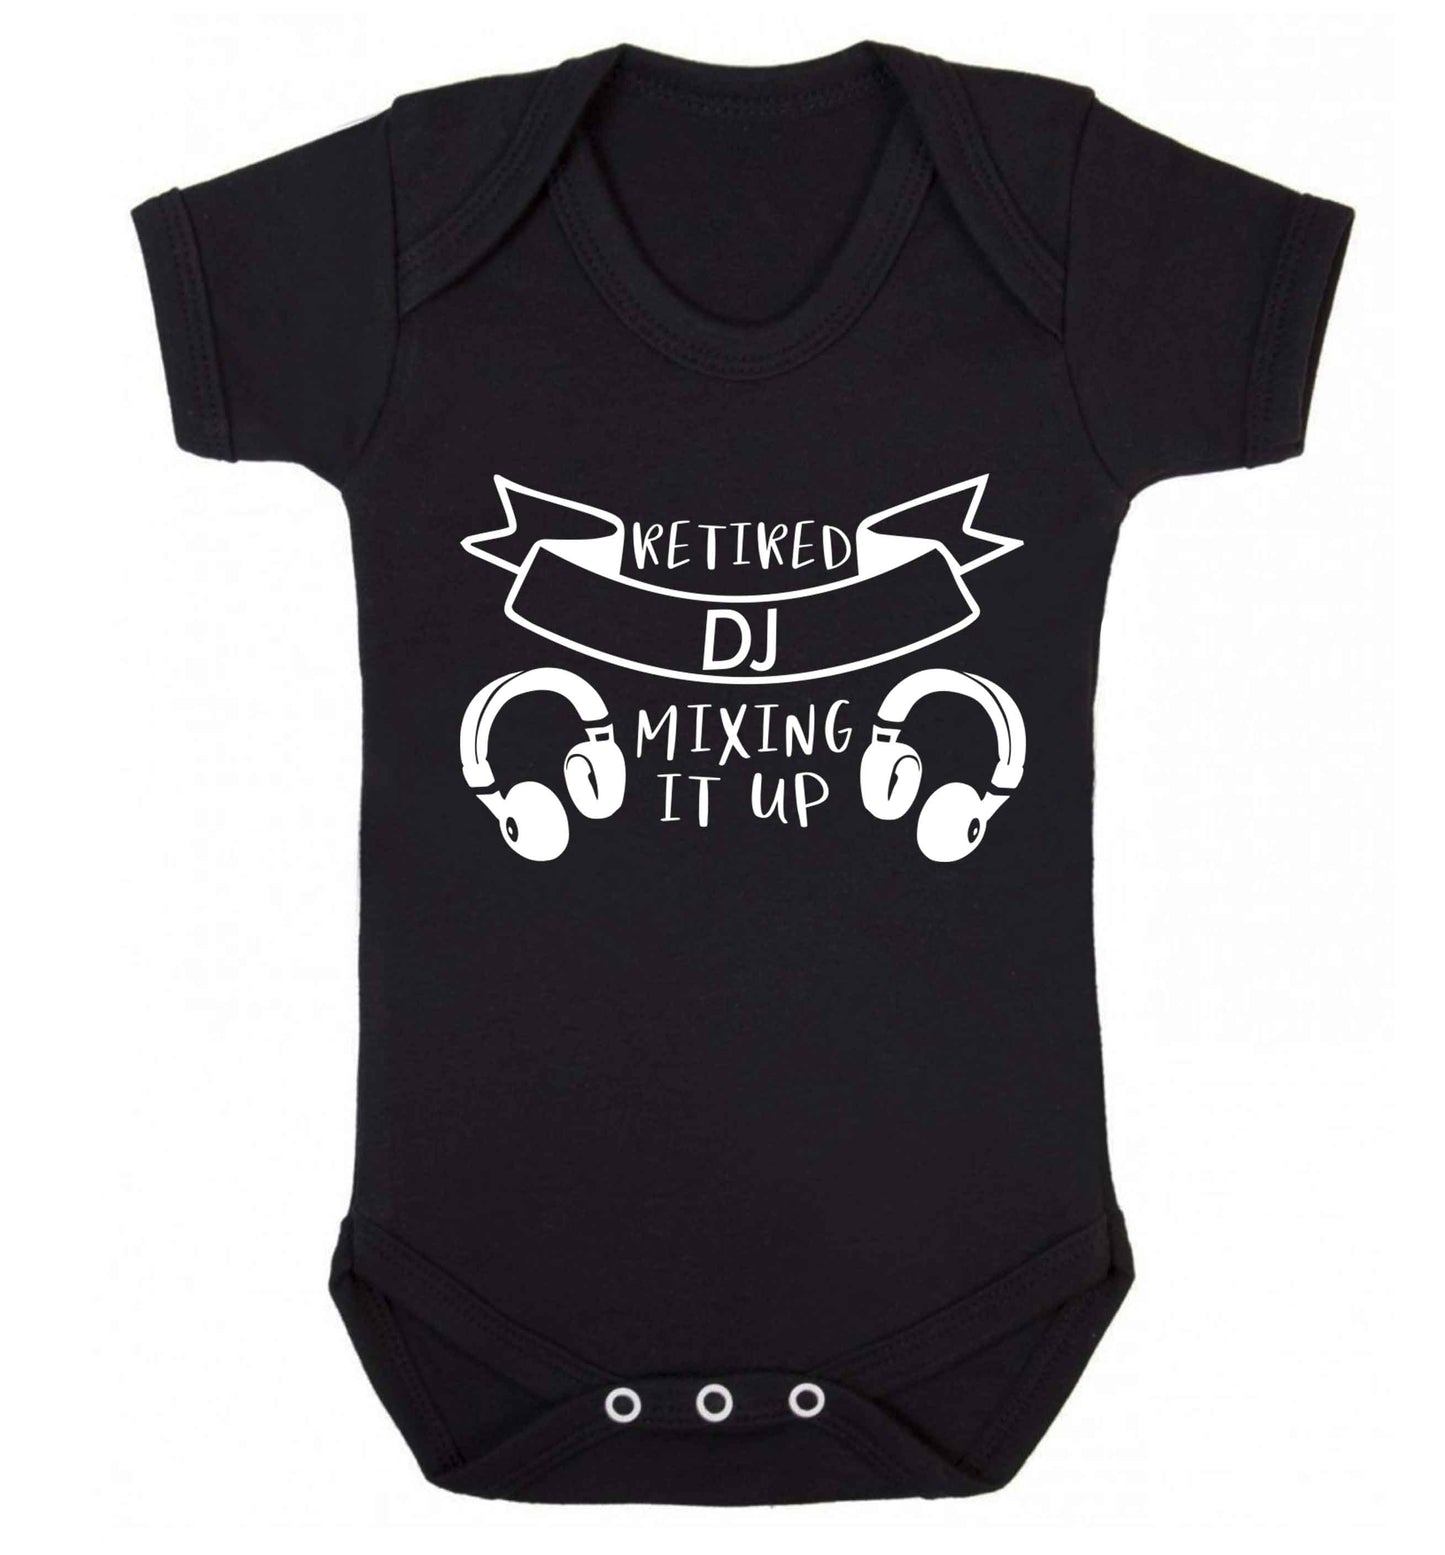 Retired DJ mixing it up Baby Vest black 18-24 months